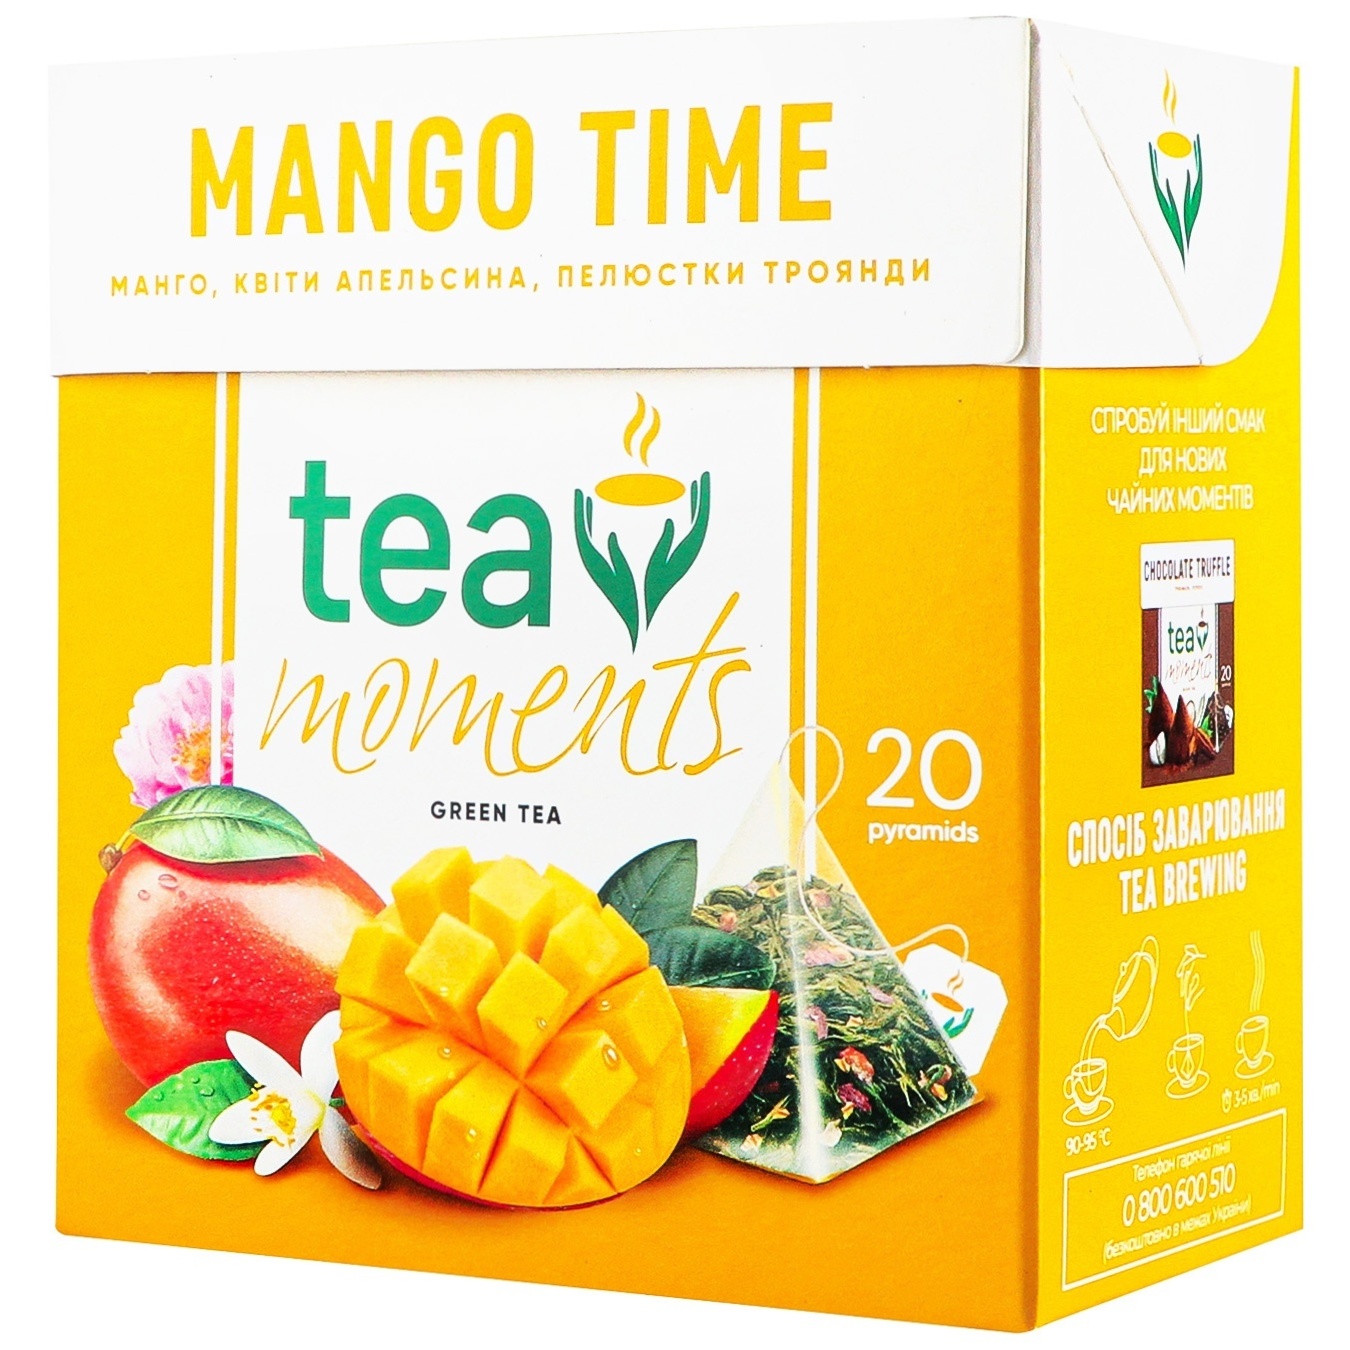 Tea Moments Mango Time green tea flavored pyramids 20*1.7g